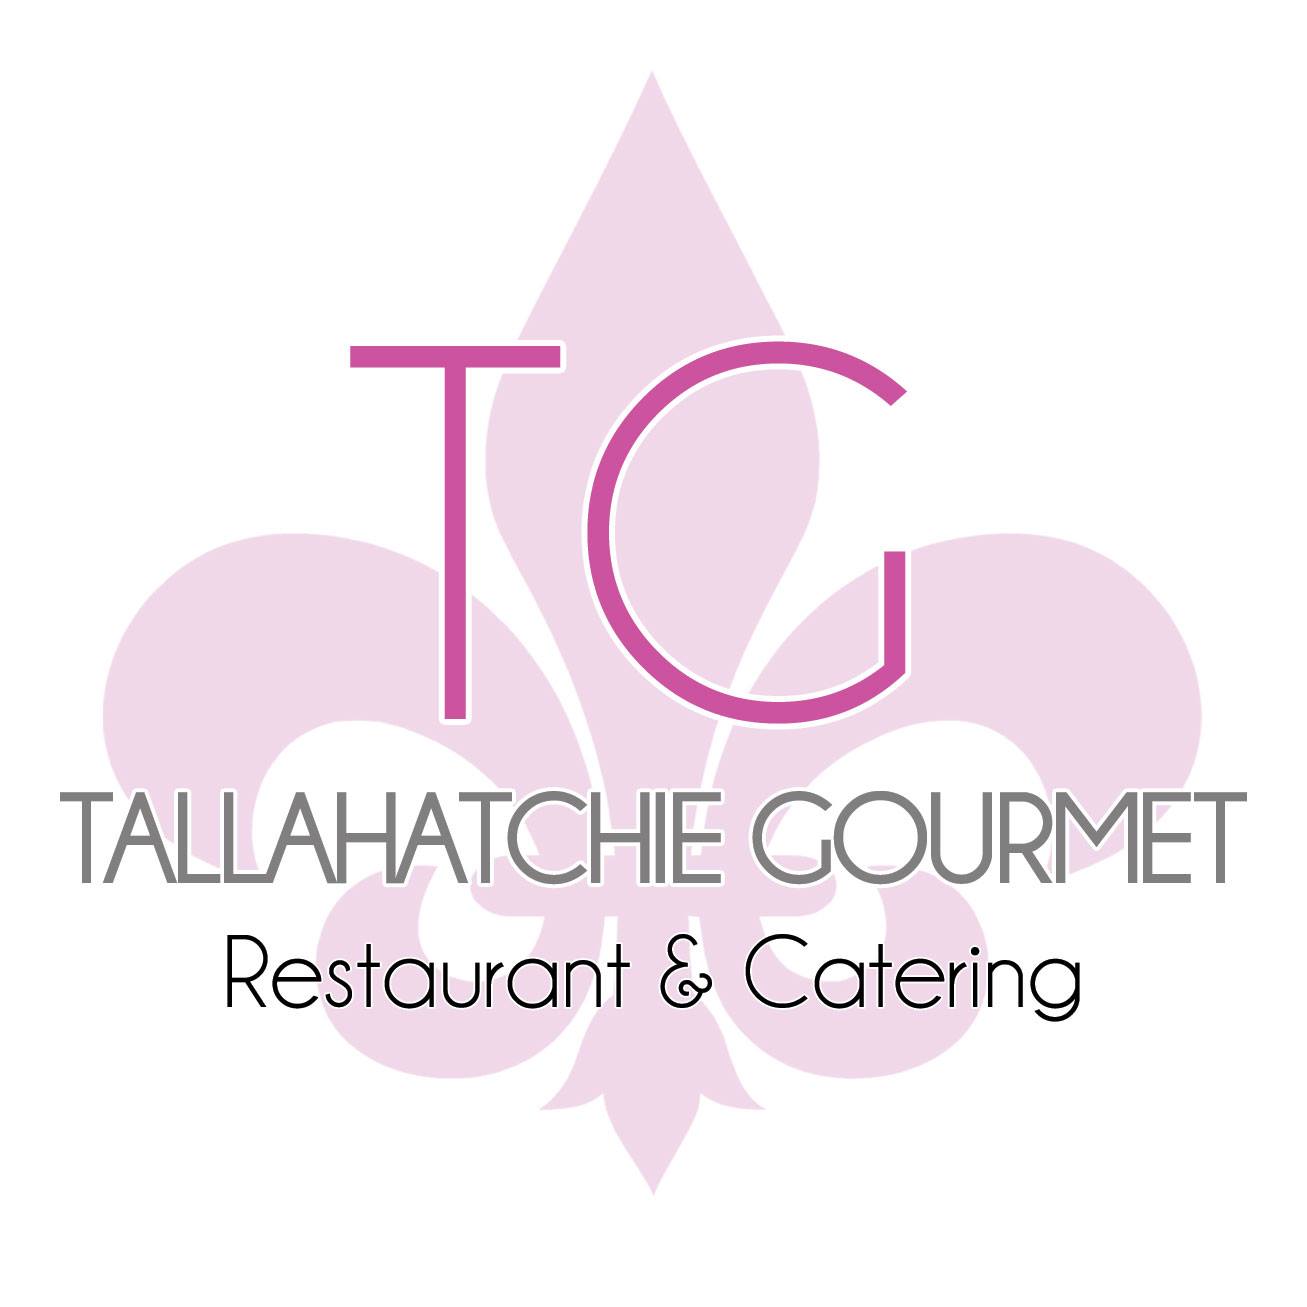 Tallahatchie Gourmet Restaurant